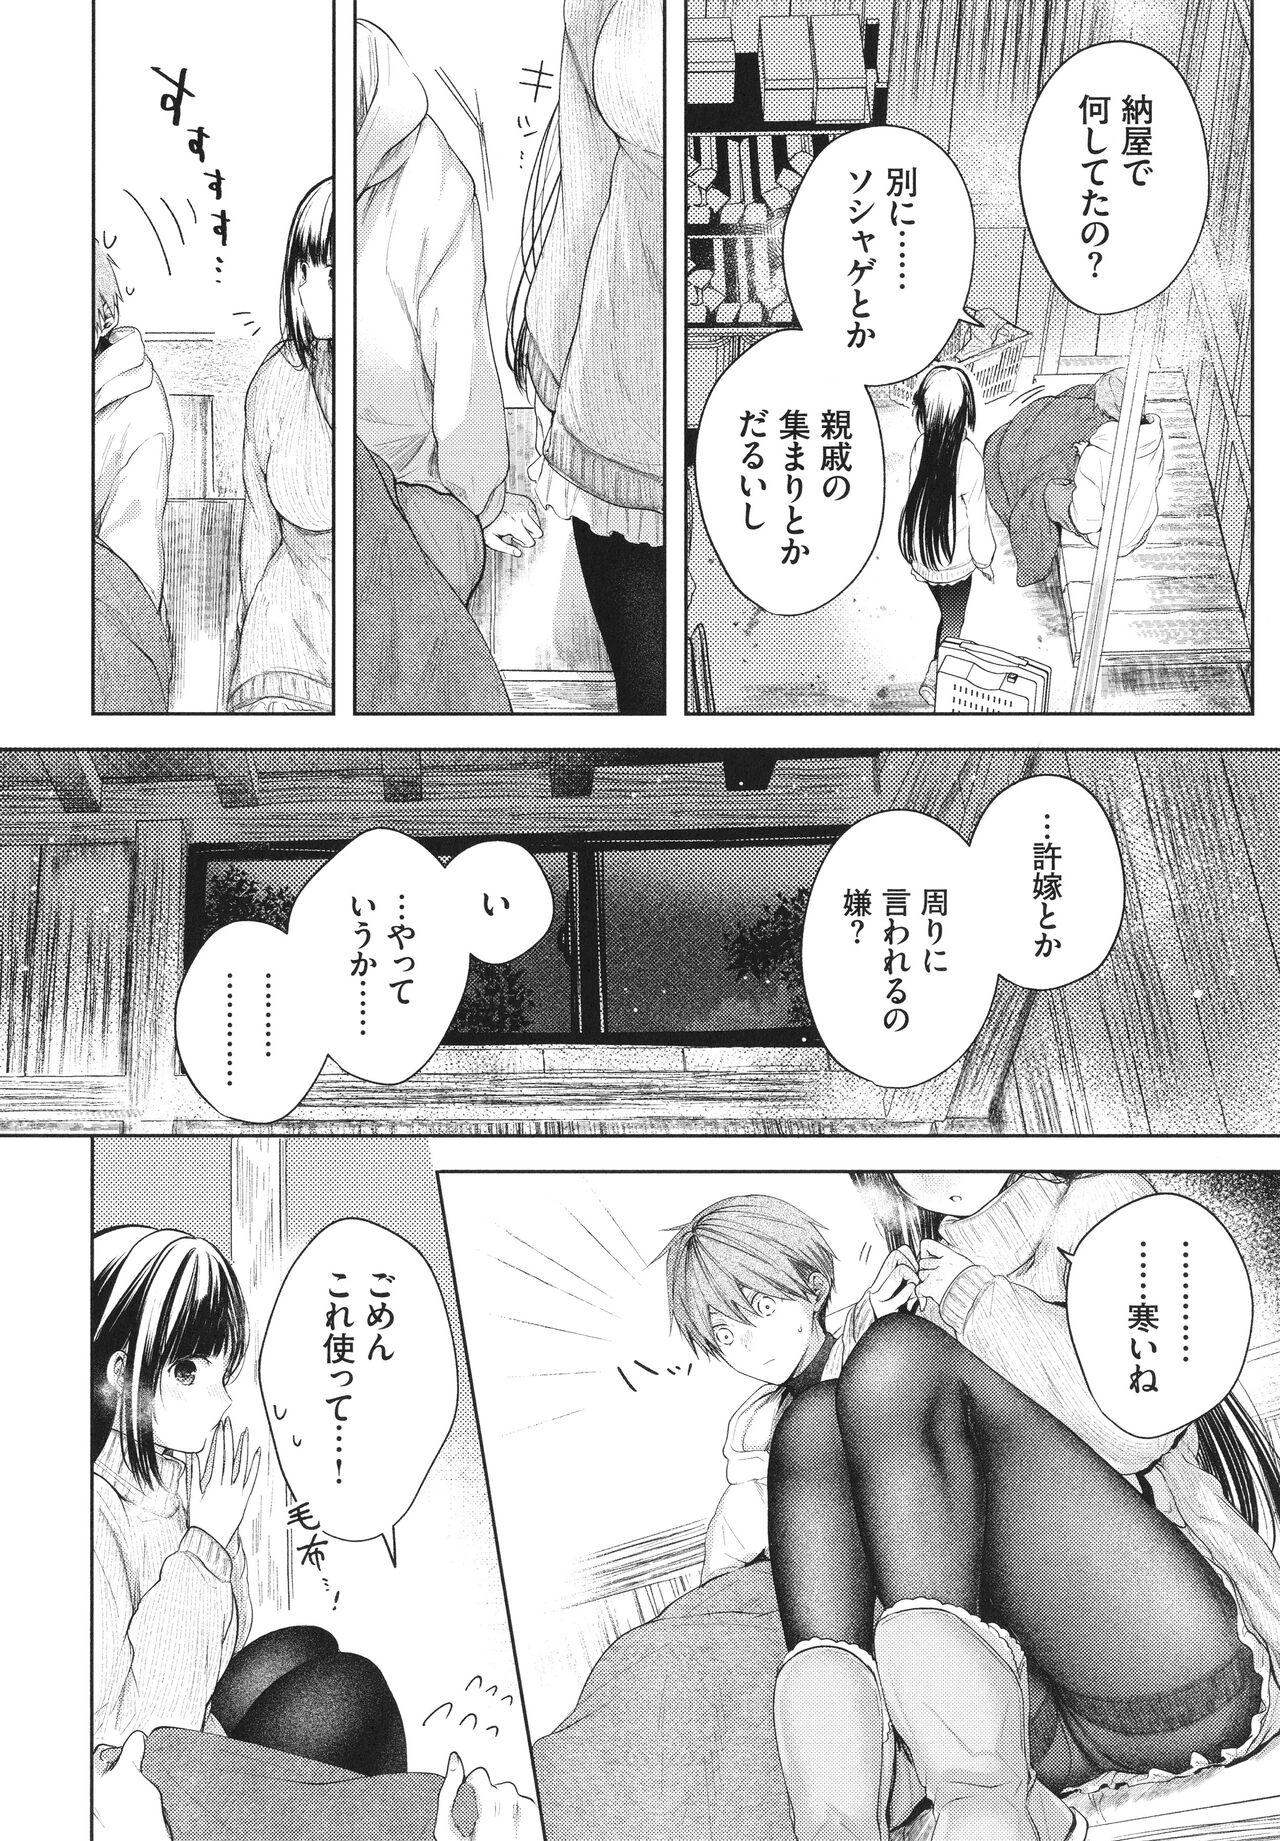 Shaking Ii mo Amai mo Kimi to Dake. - You're the only one I love. Mediumtits - Page 7